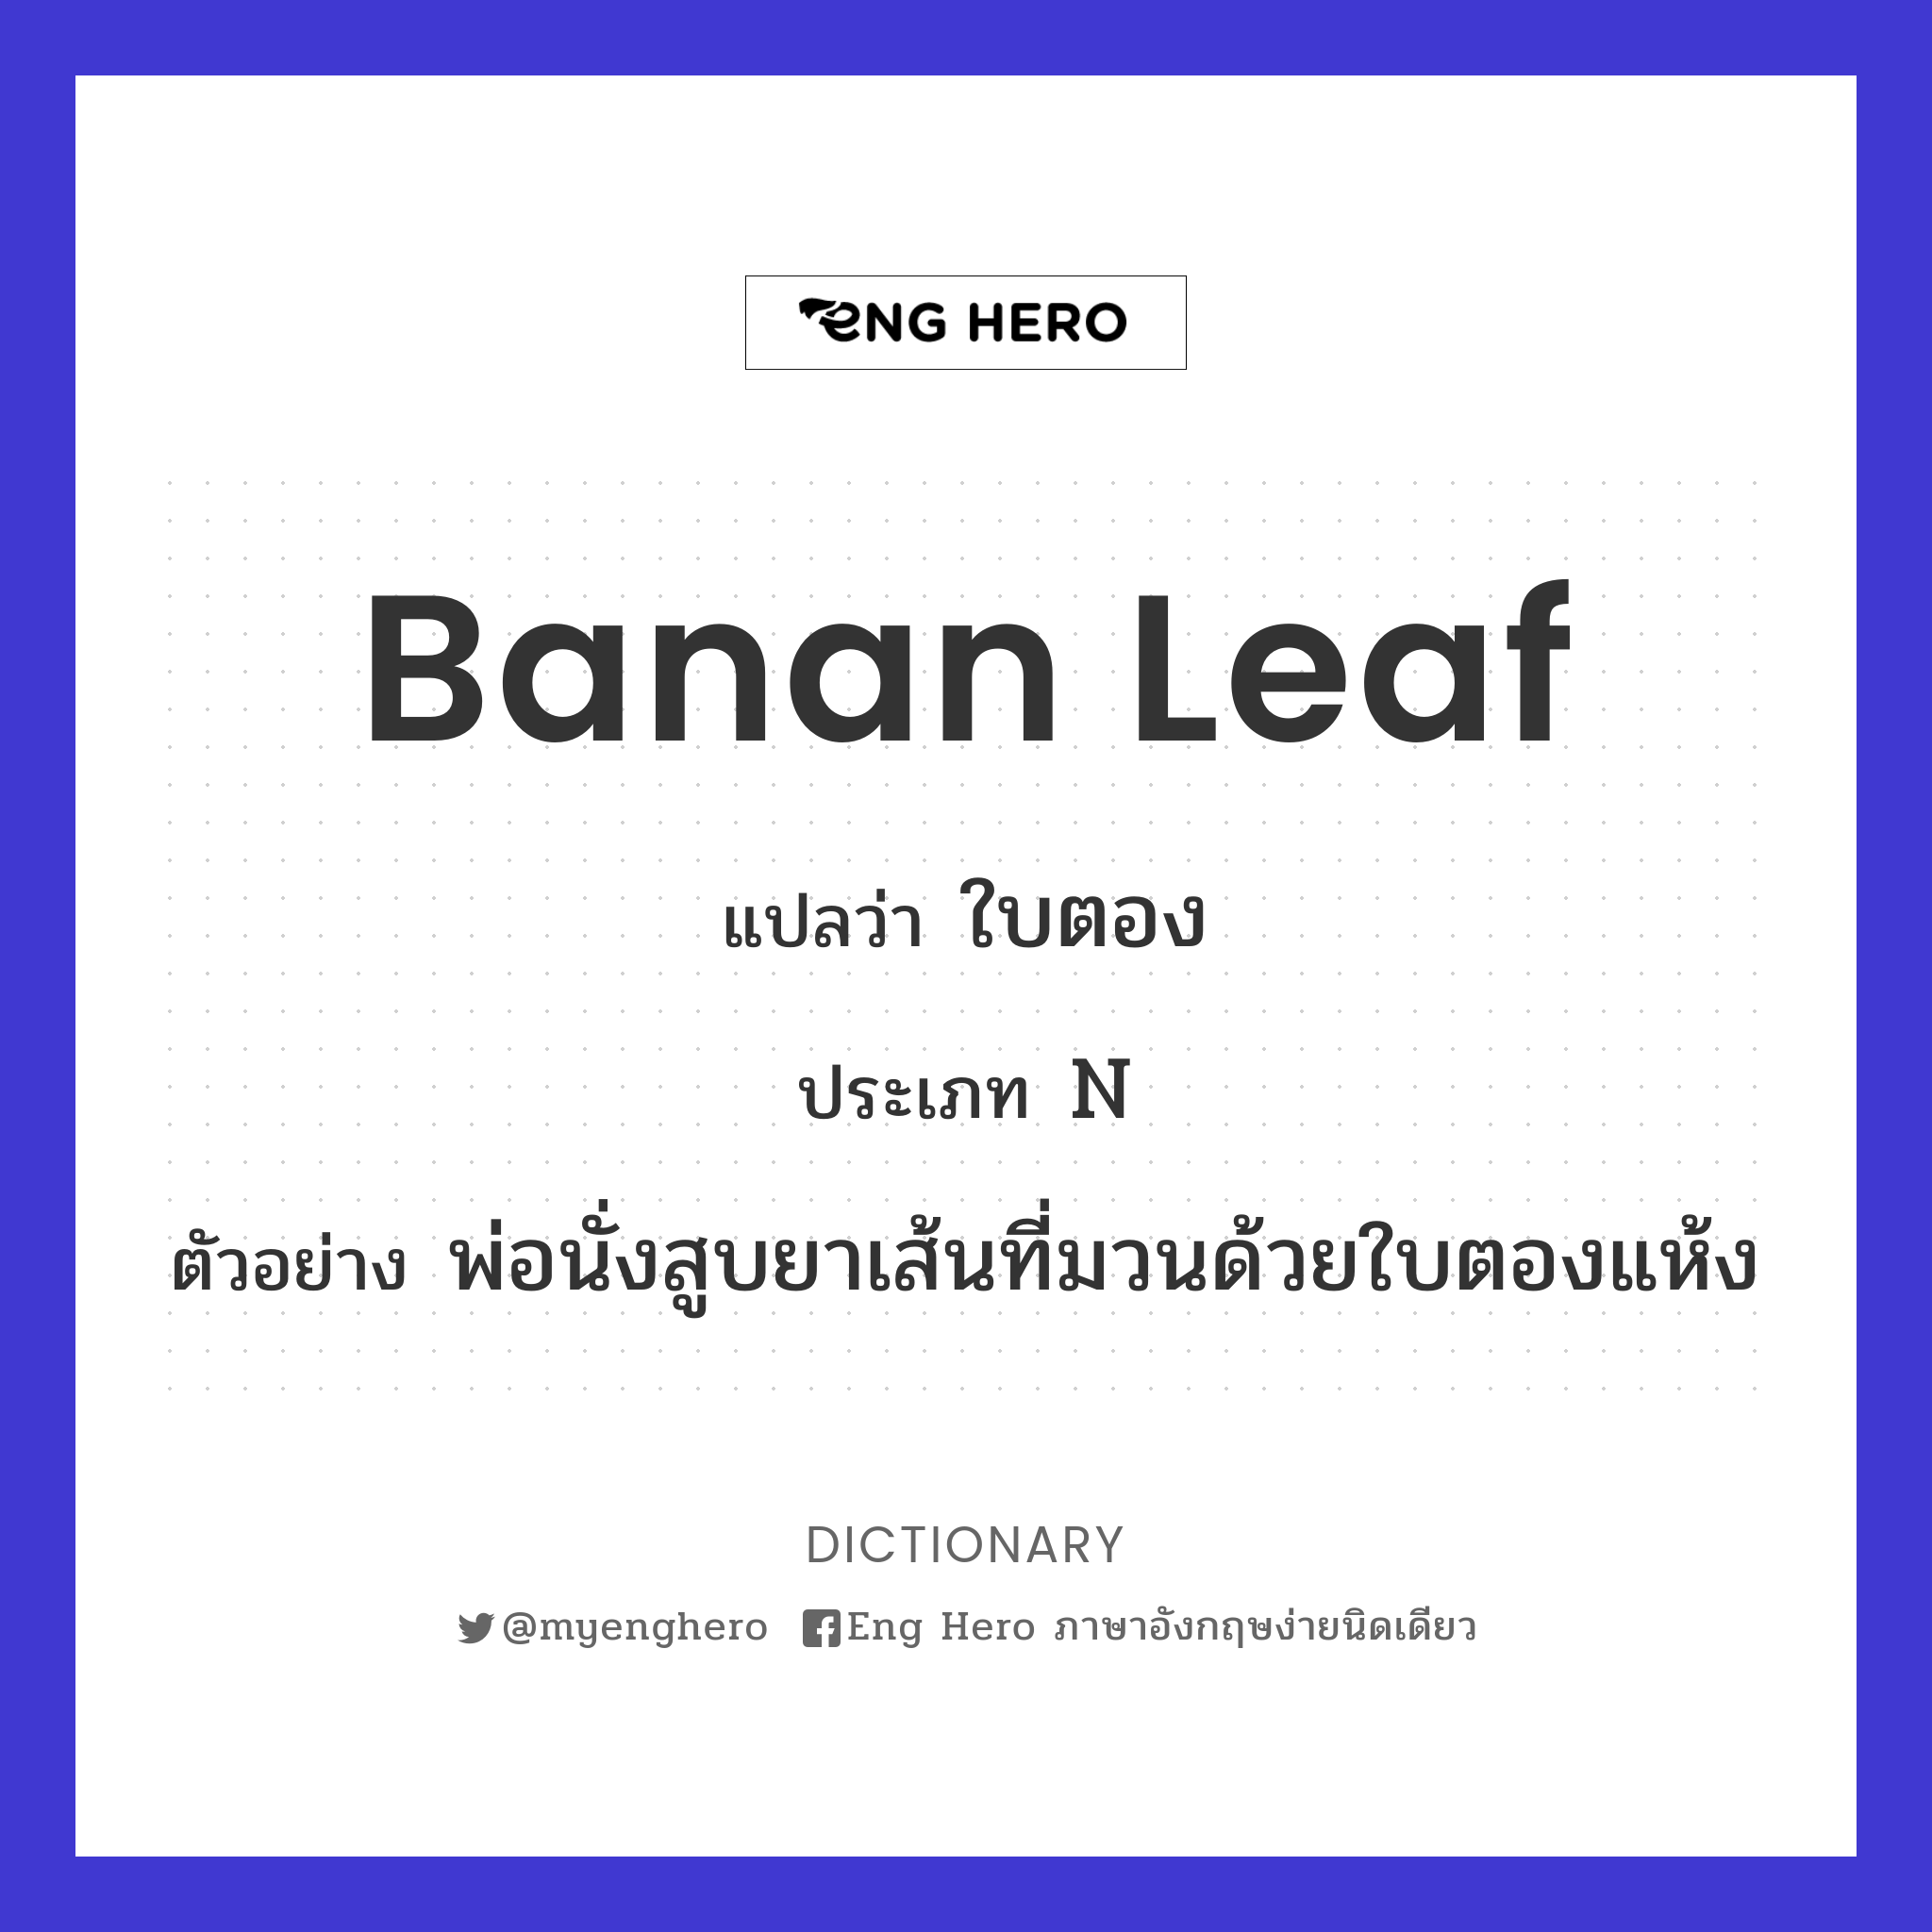 banan leaf